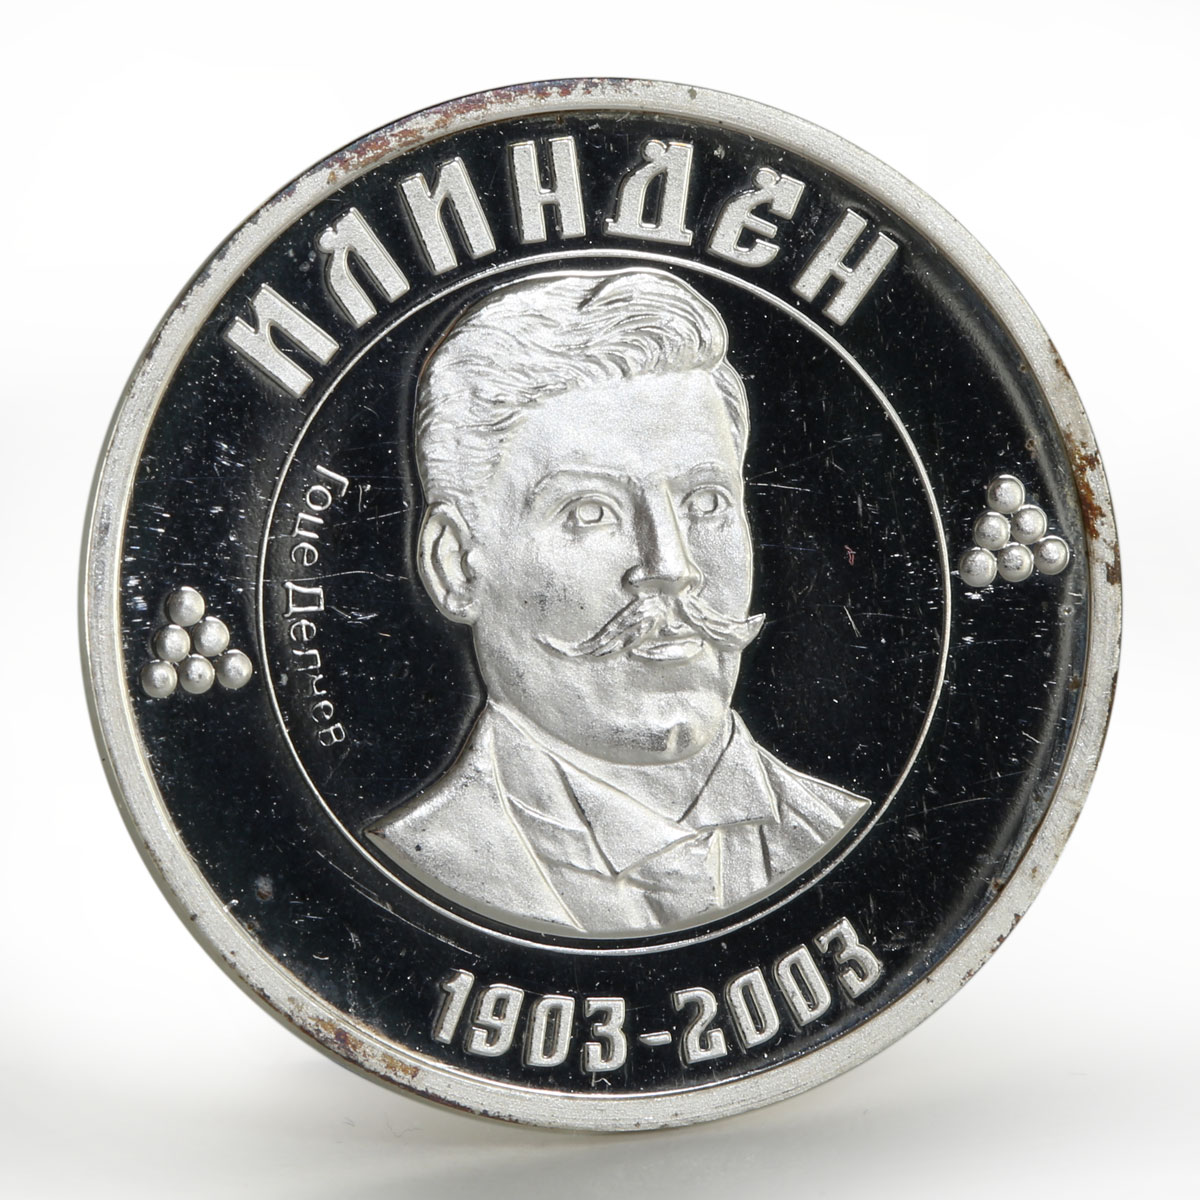 Macedonia 100 denari Gotse Delchev revolutionary proof silver coin 2003